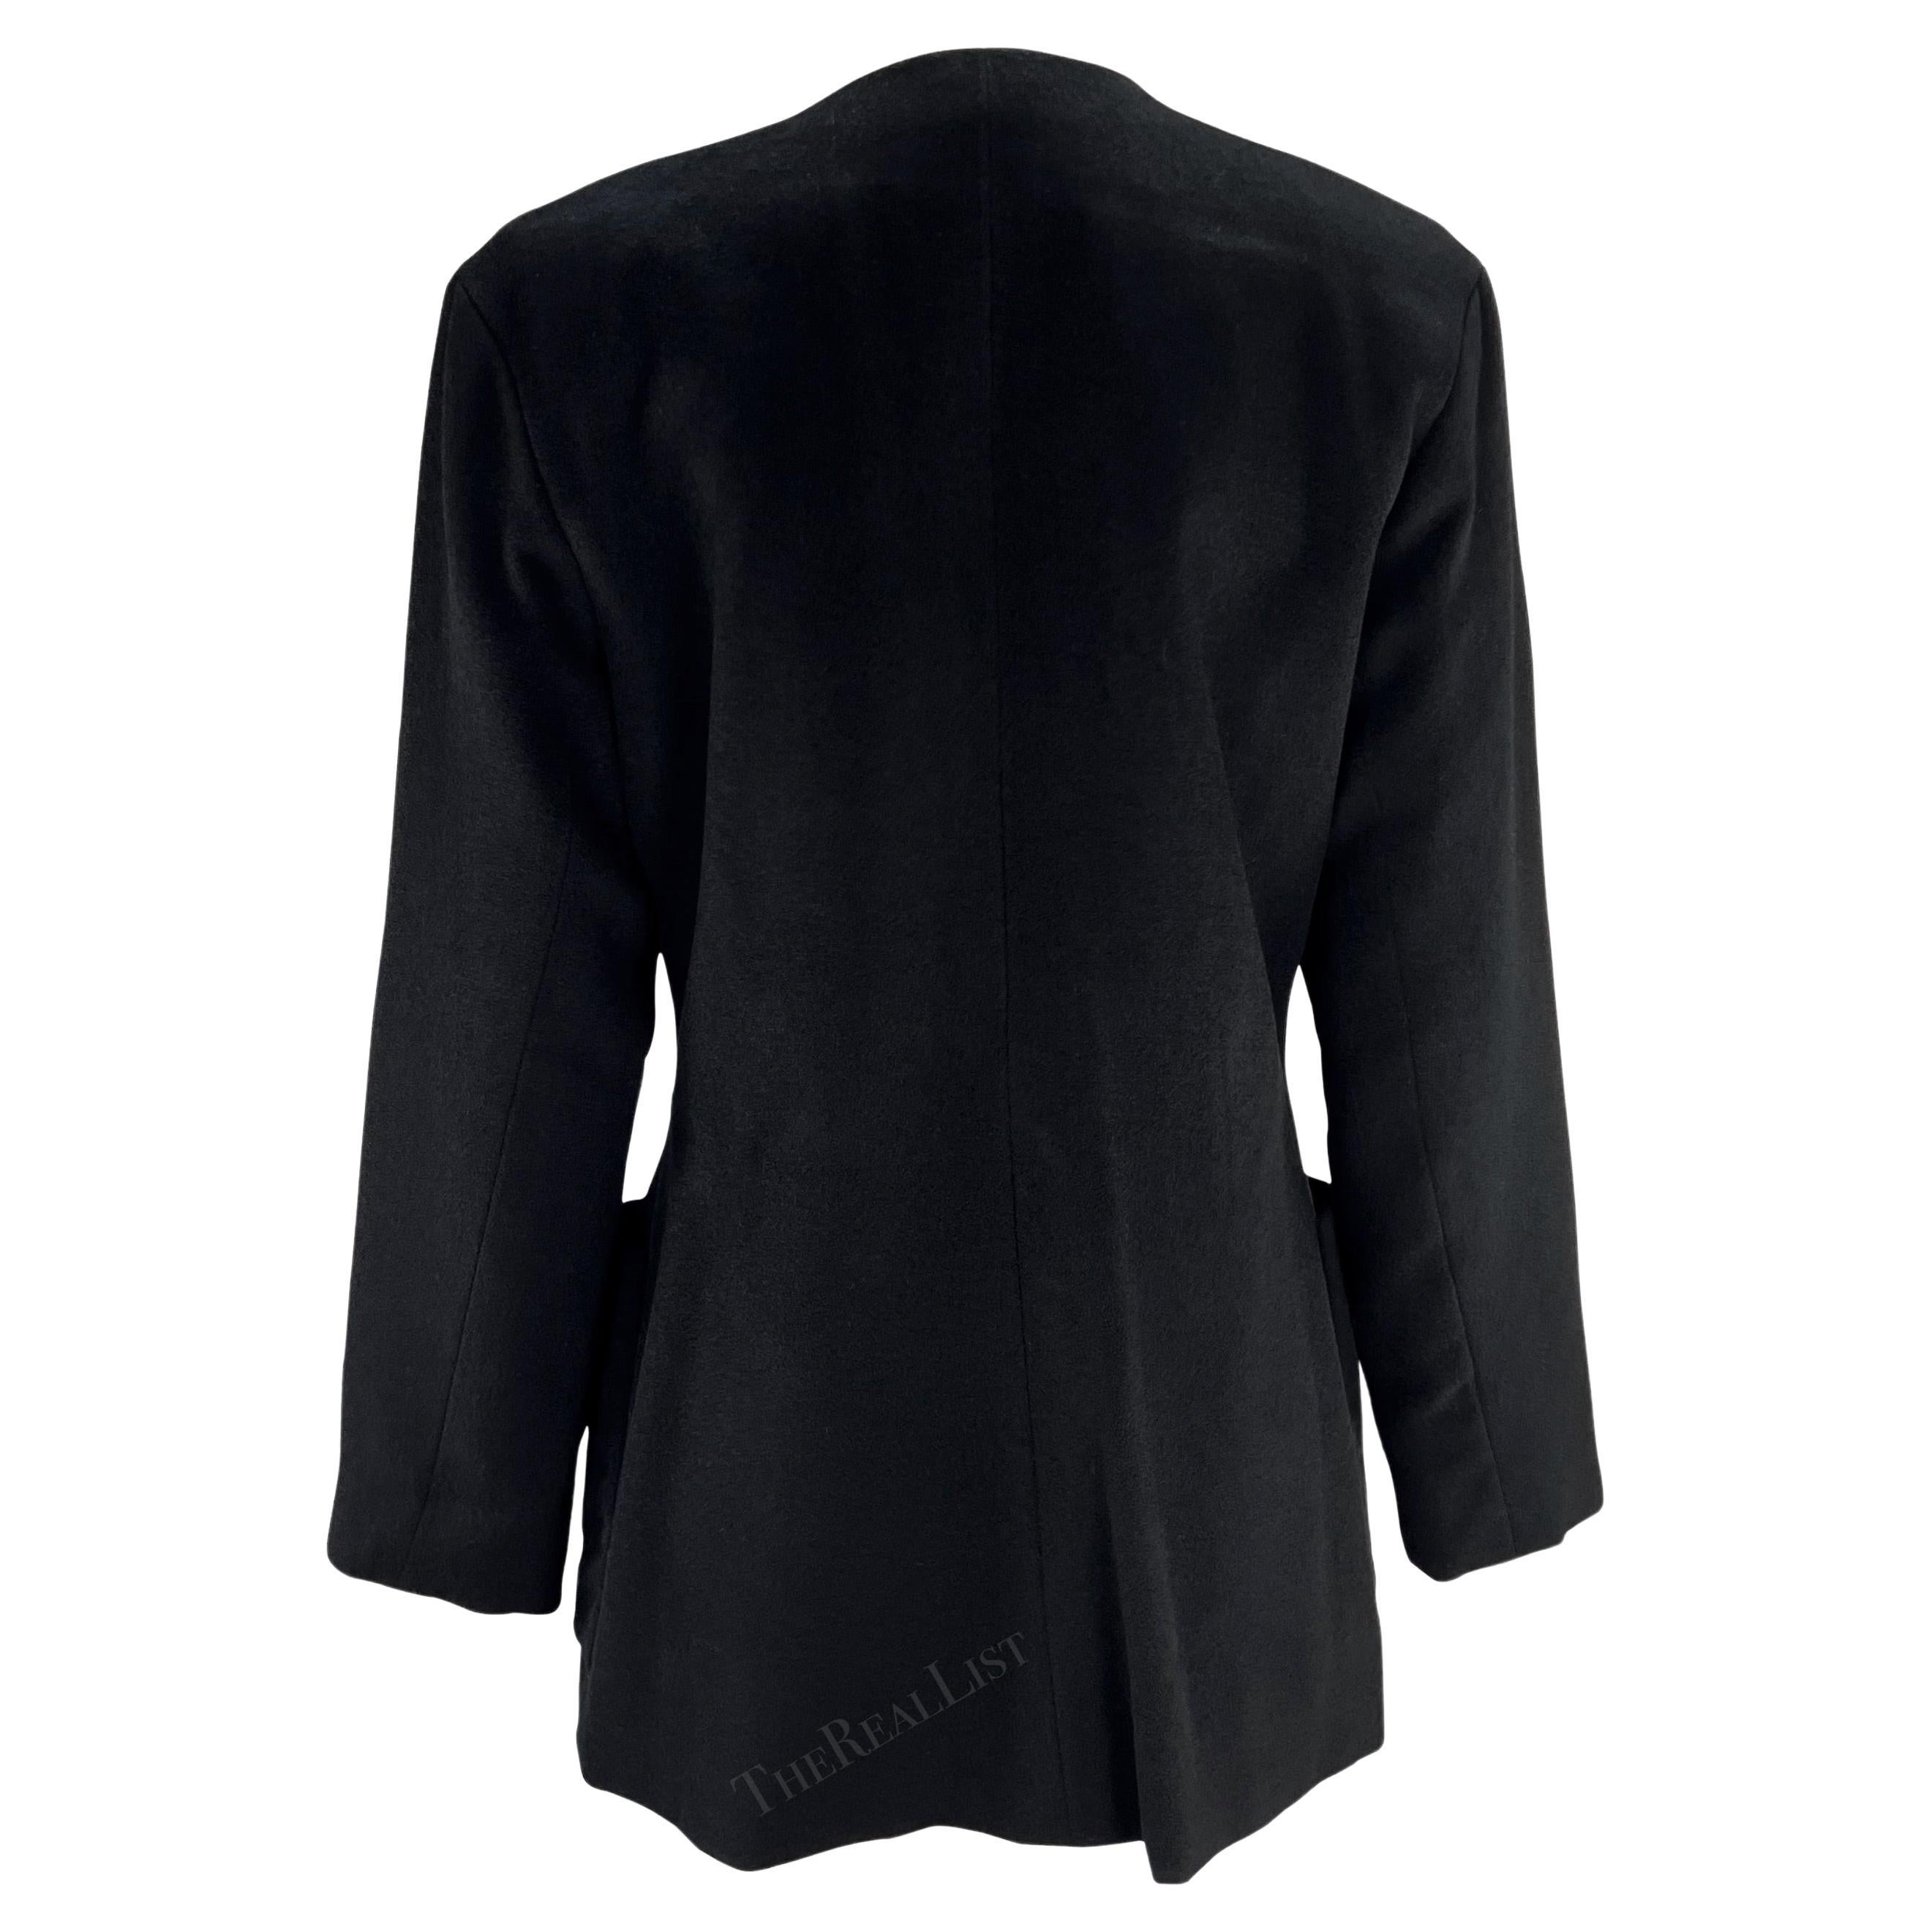 S/S 1992 Yves Saint Laurent Red Color-Block Black Mini Coat Dress Blazer Jacket For Sale 2